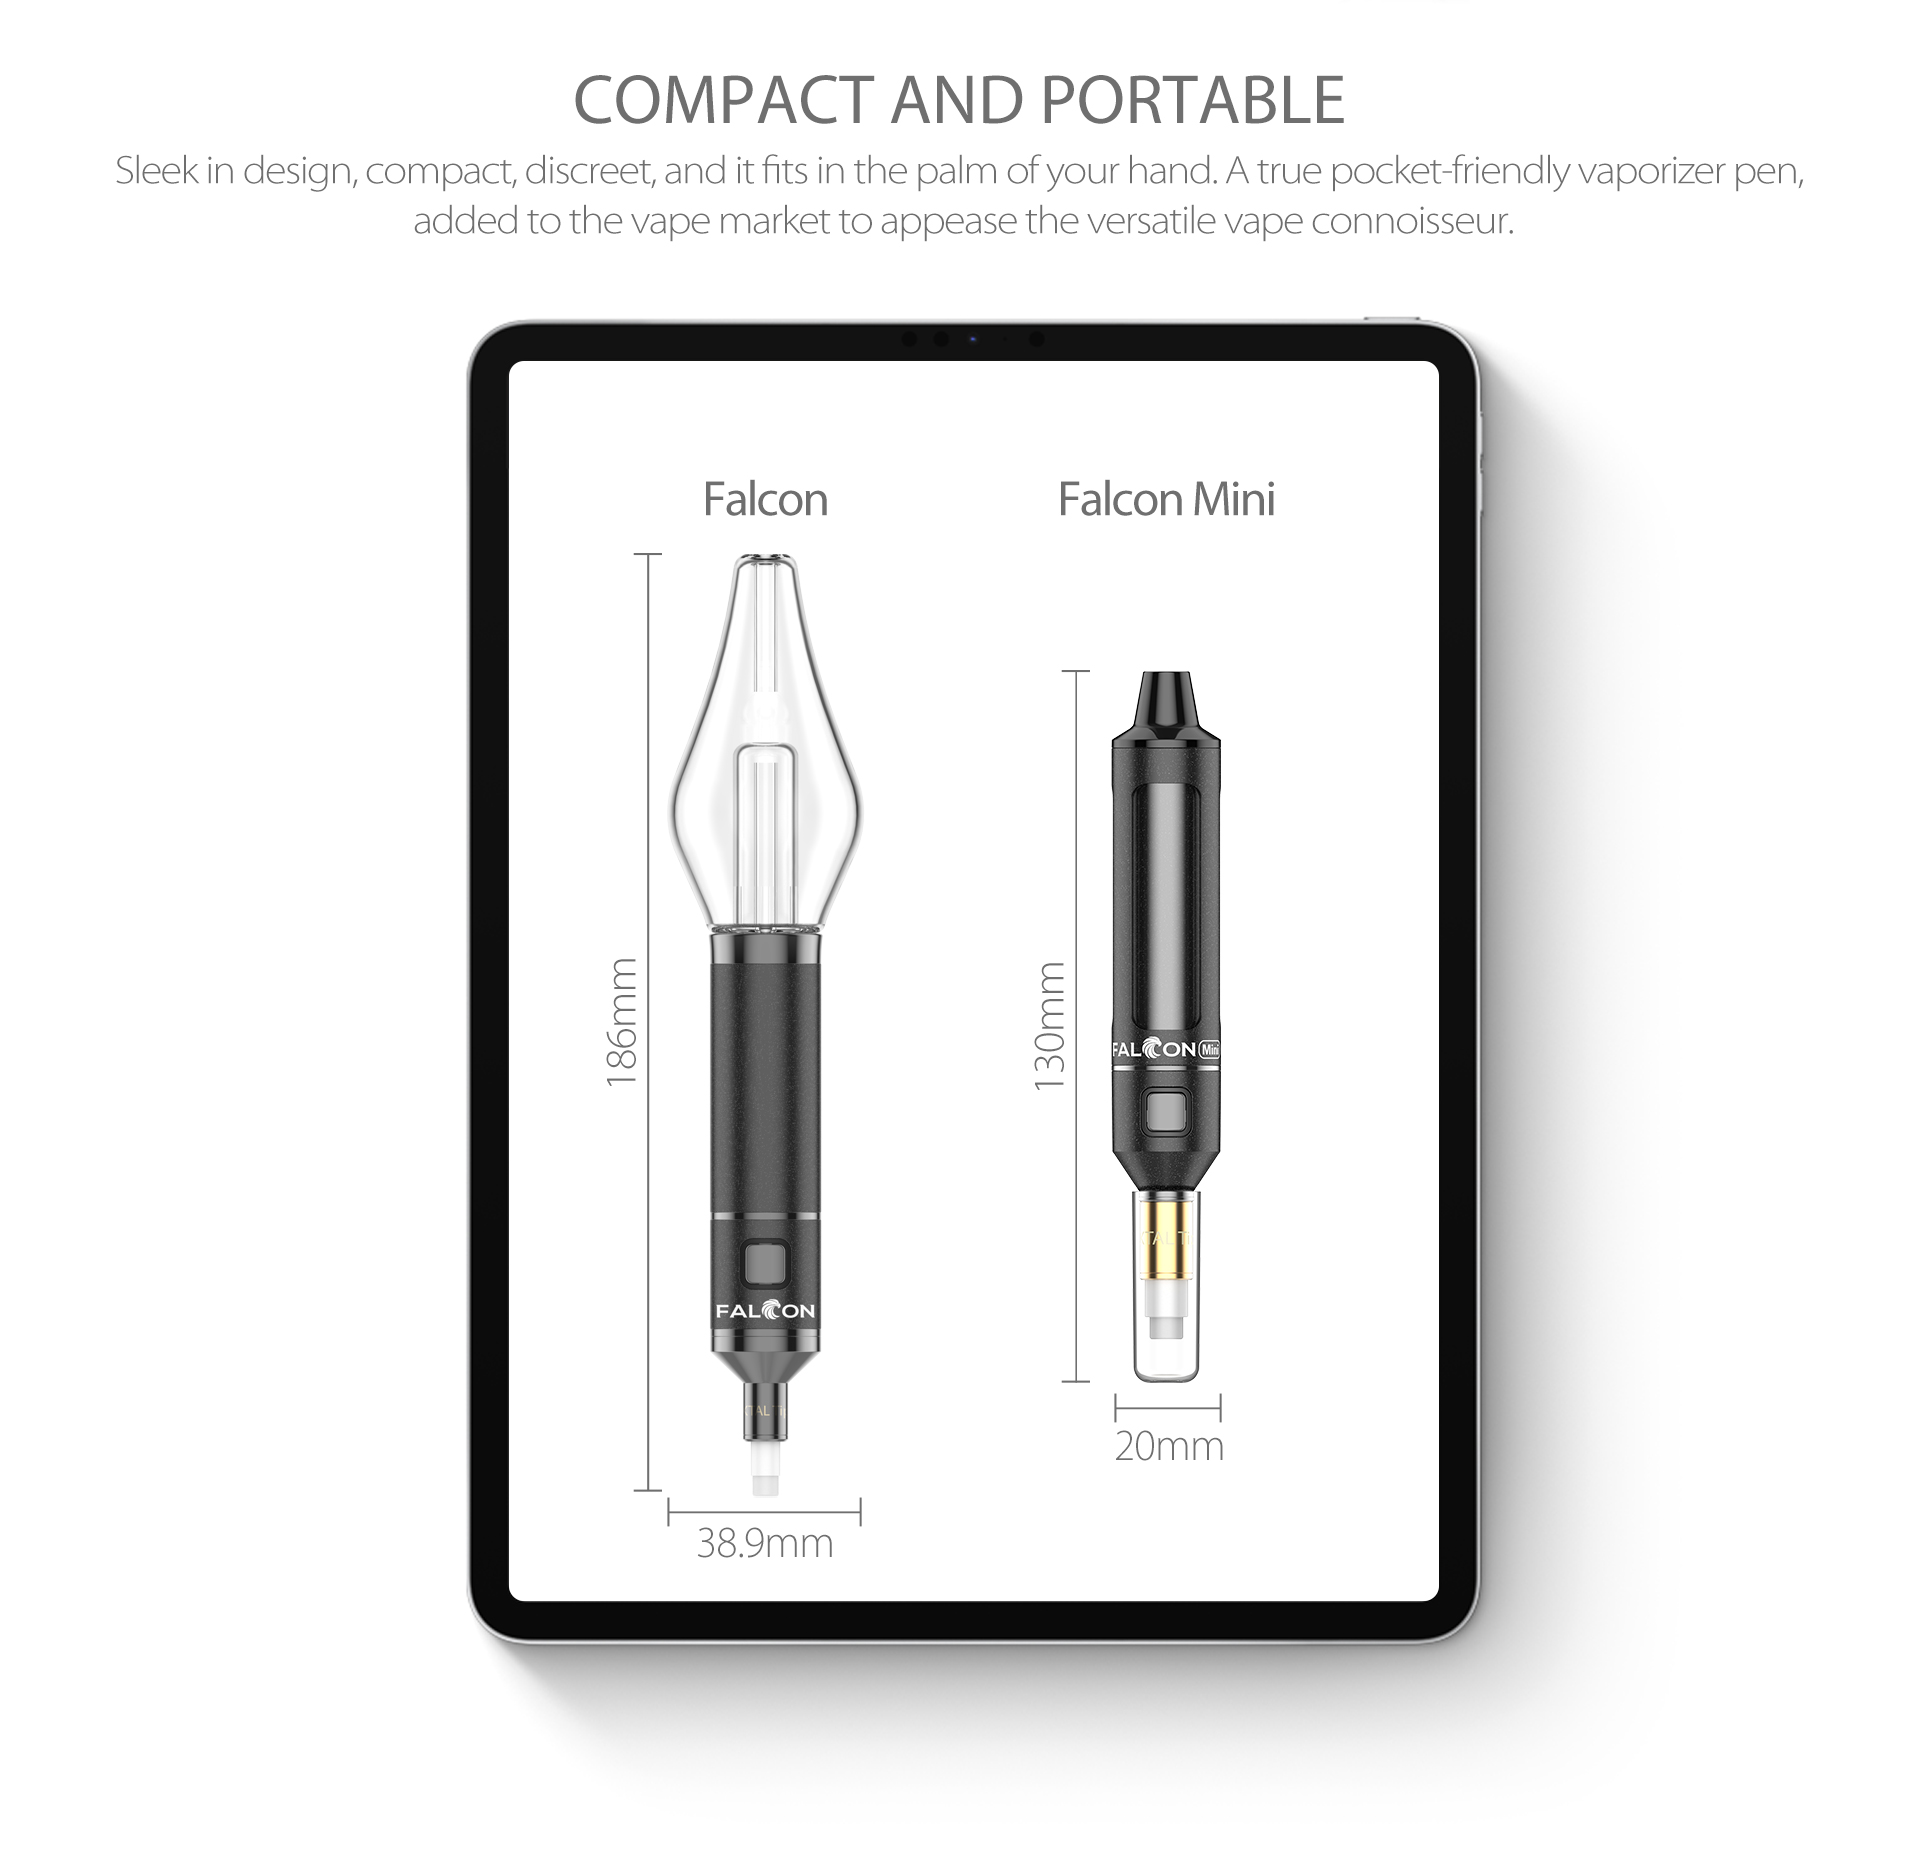 Yocan Falcon Mini Vaporizer Pen is very compact and portable.